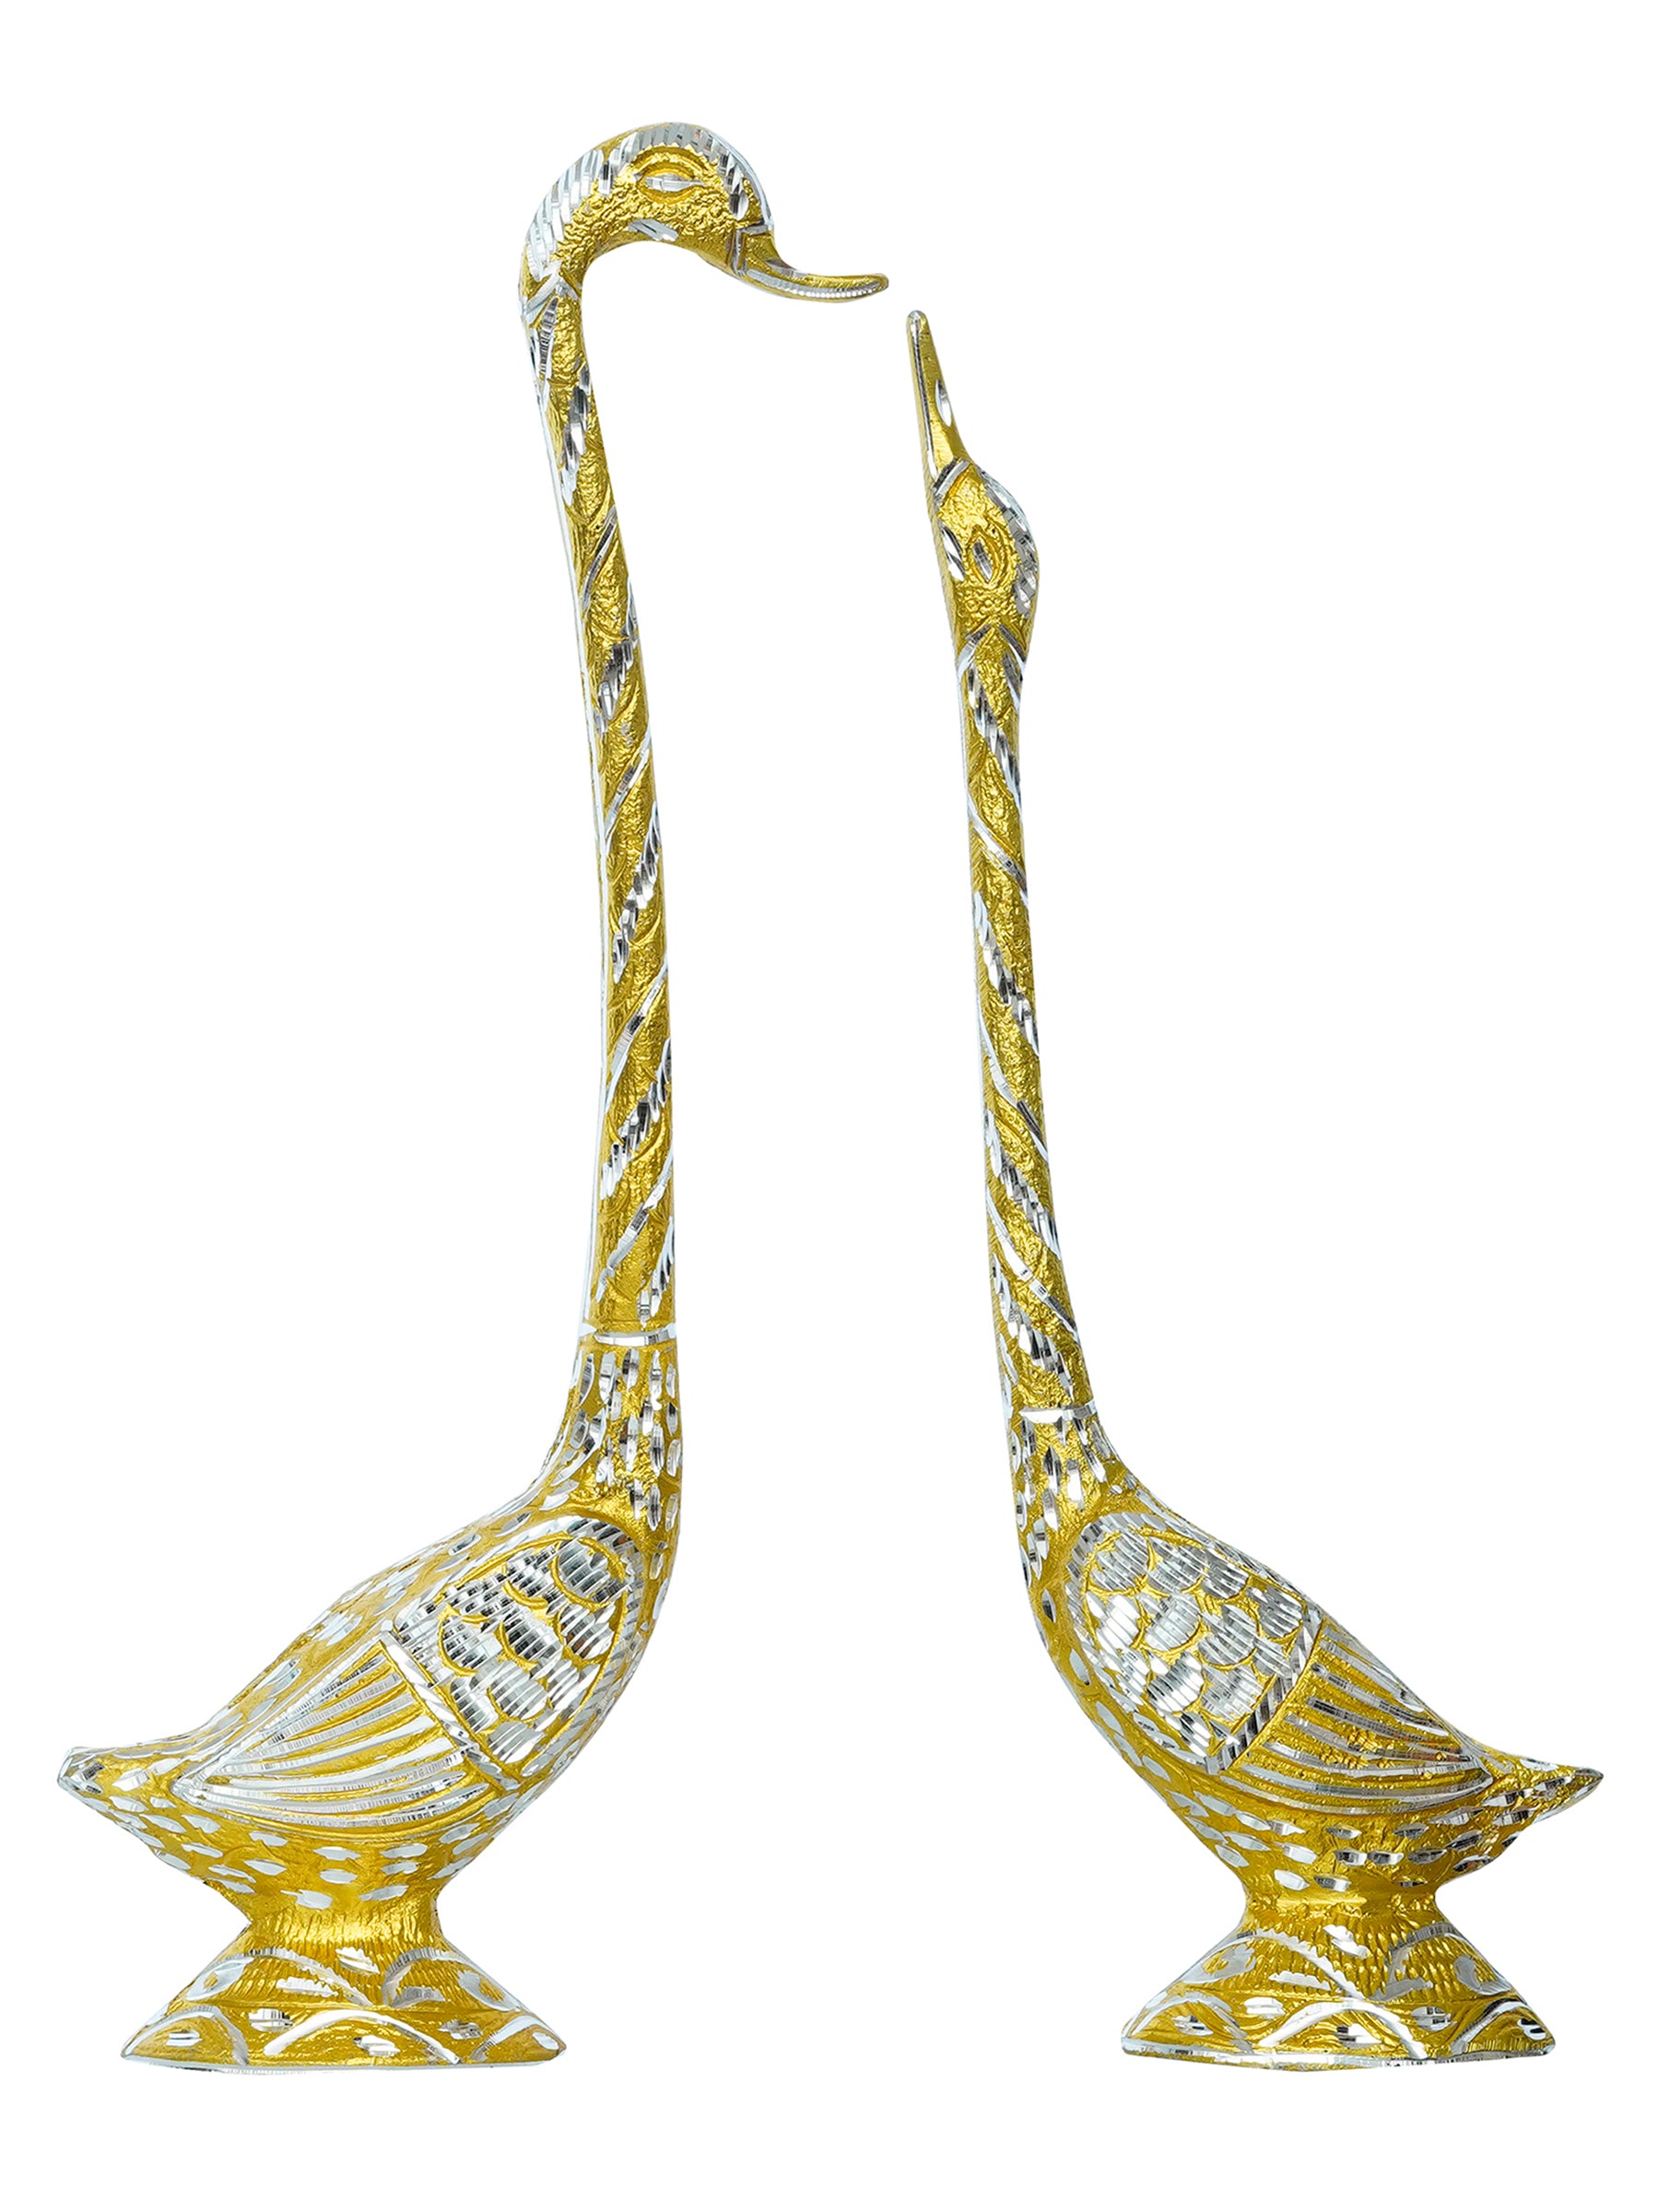 Golden Metal Kissing Swan Couple Handcrafted Decorative showpiece Love Bird Figurines 2